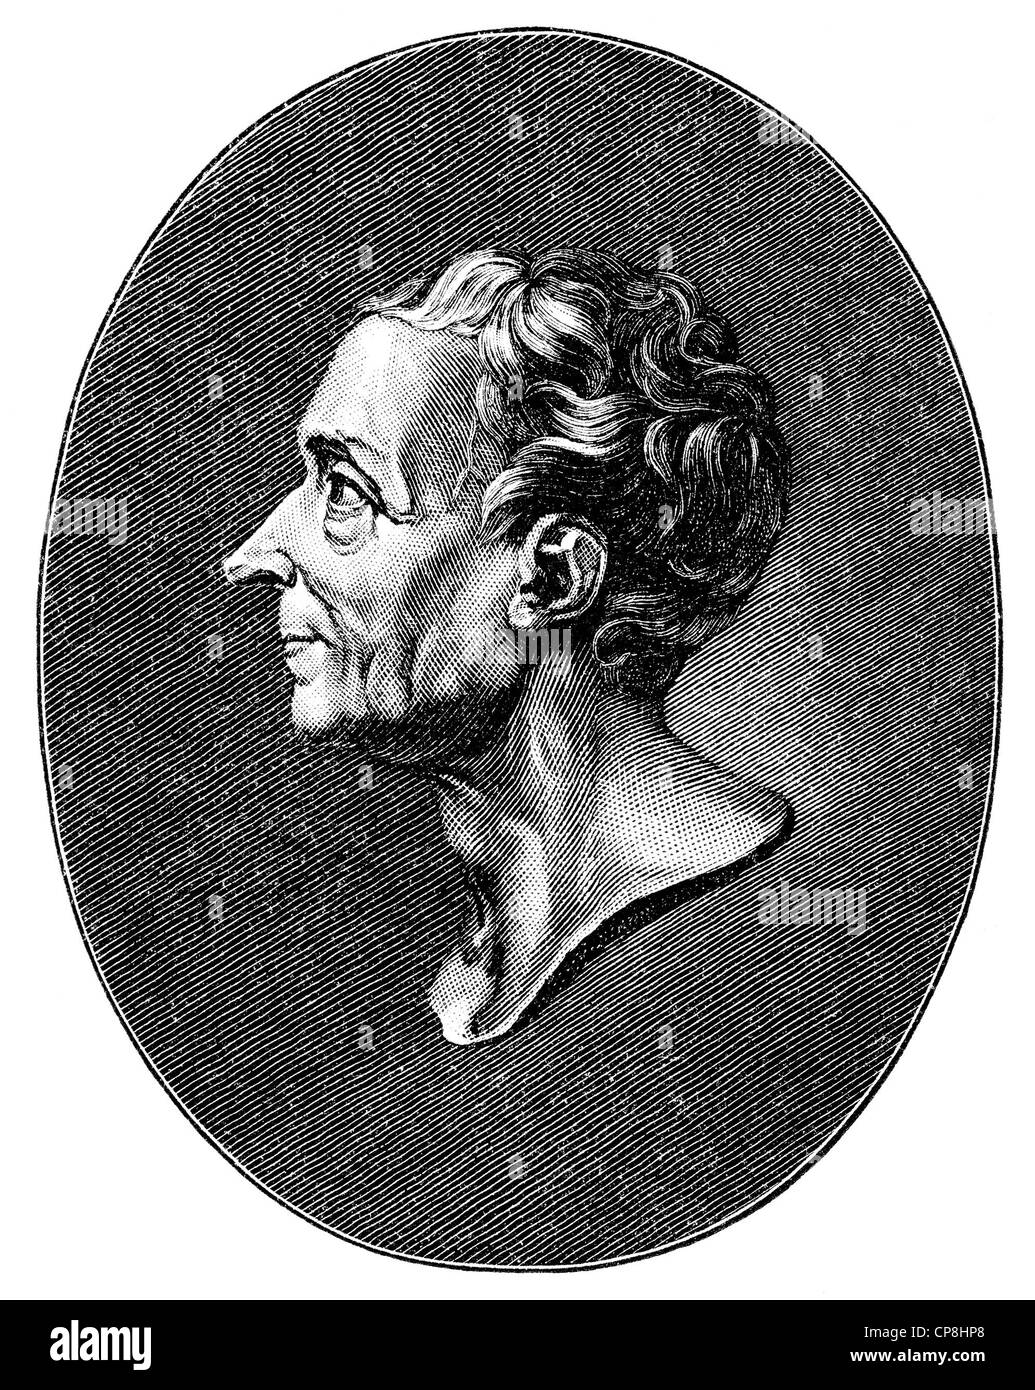 Charles-Louis de Secondat Barone de La Brède et de Montesquieu, 1689 - 1755, uno scrittore francese, filosofo e teorico politico Foto Stock